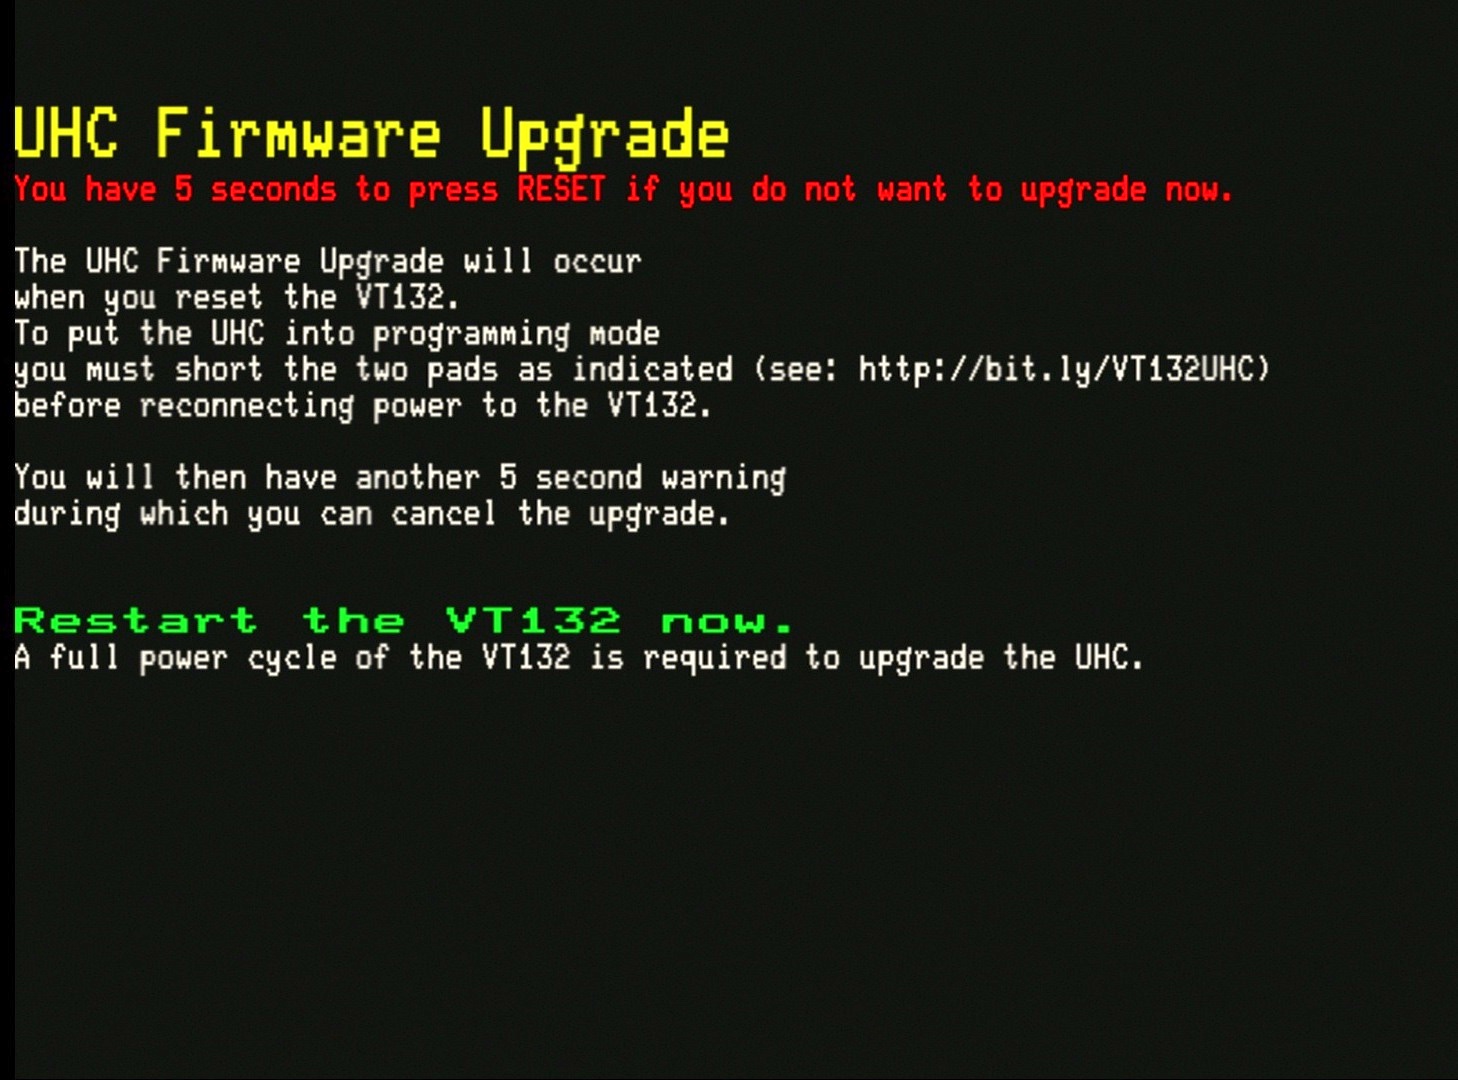 UHC firmware upgrade